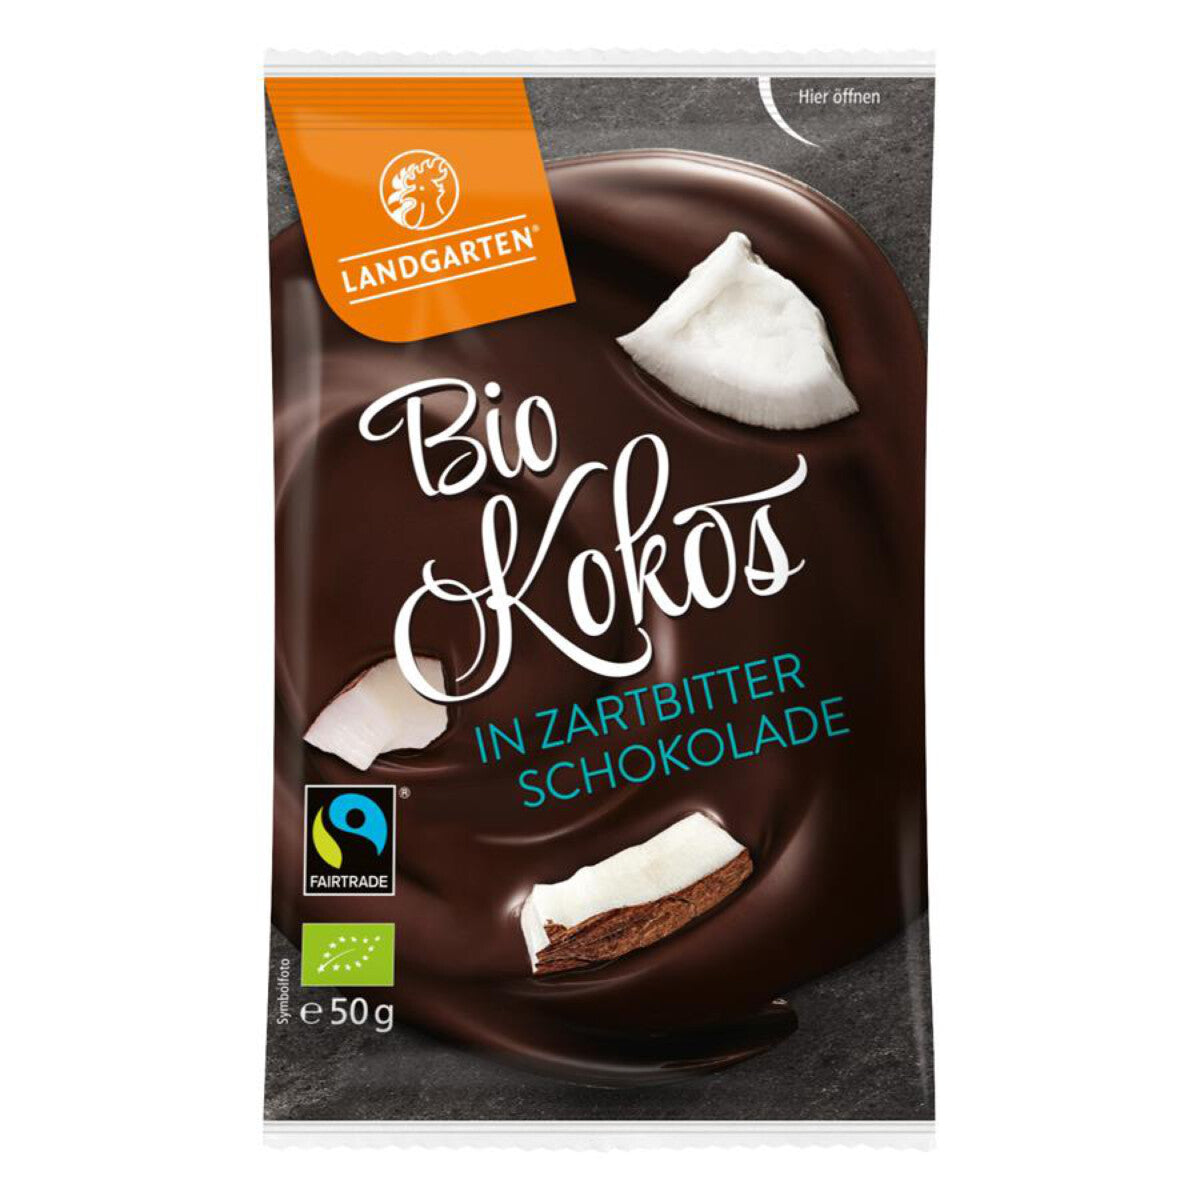 LANDGARTEN Kokos in Zartbitter-Schokolade - 50 g